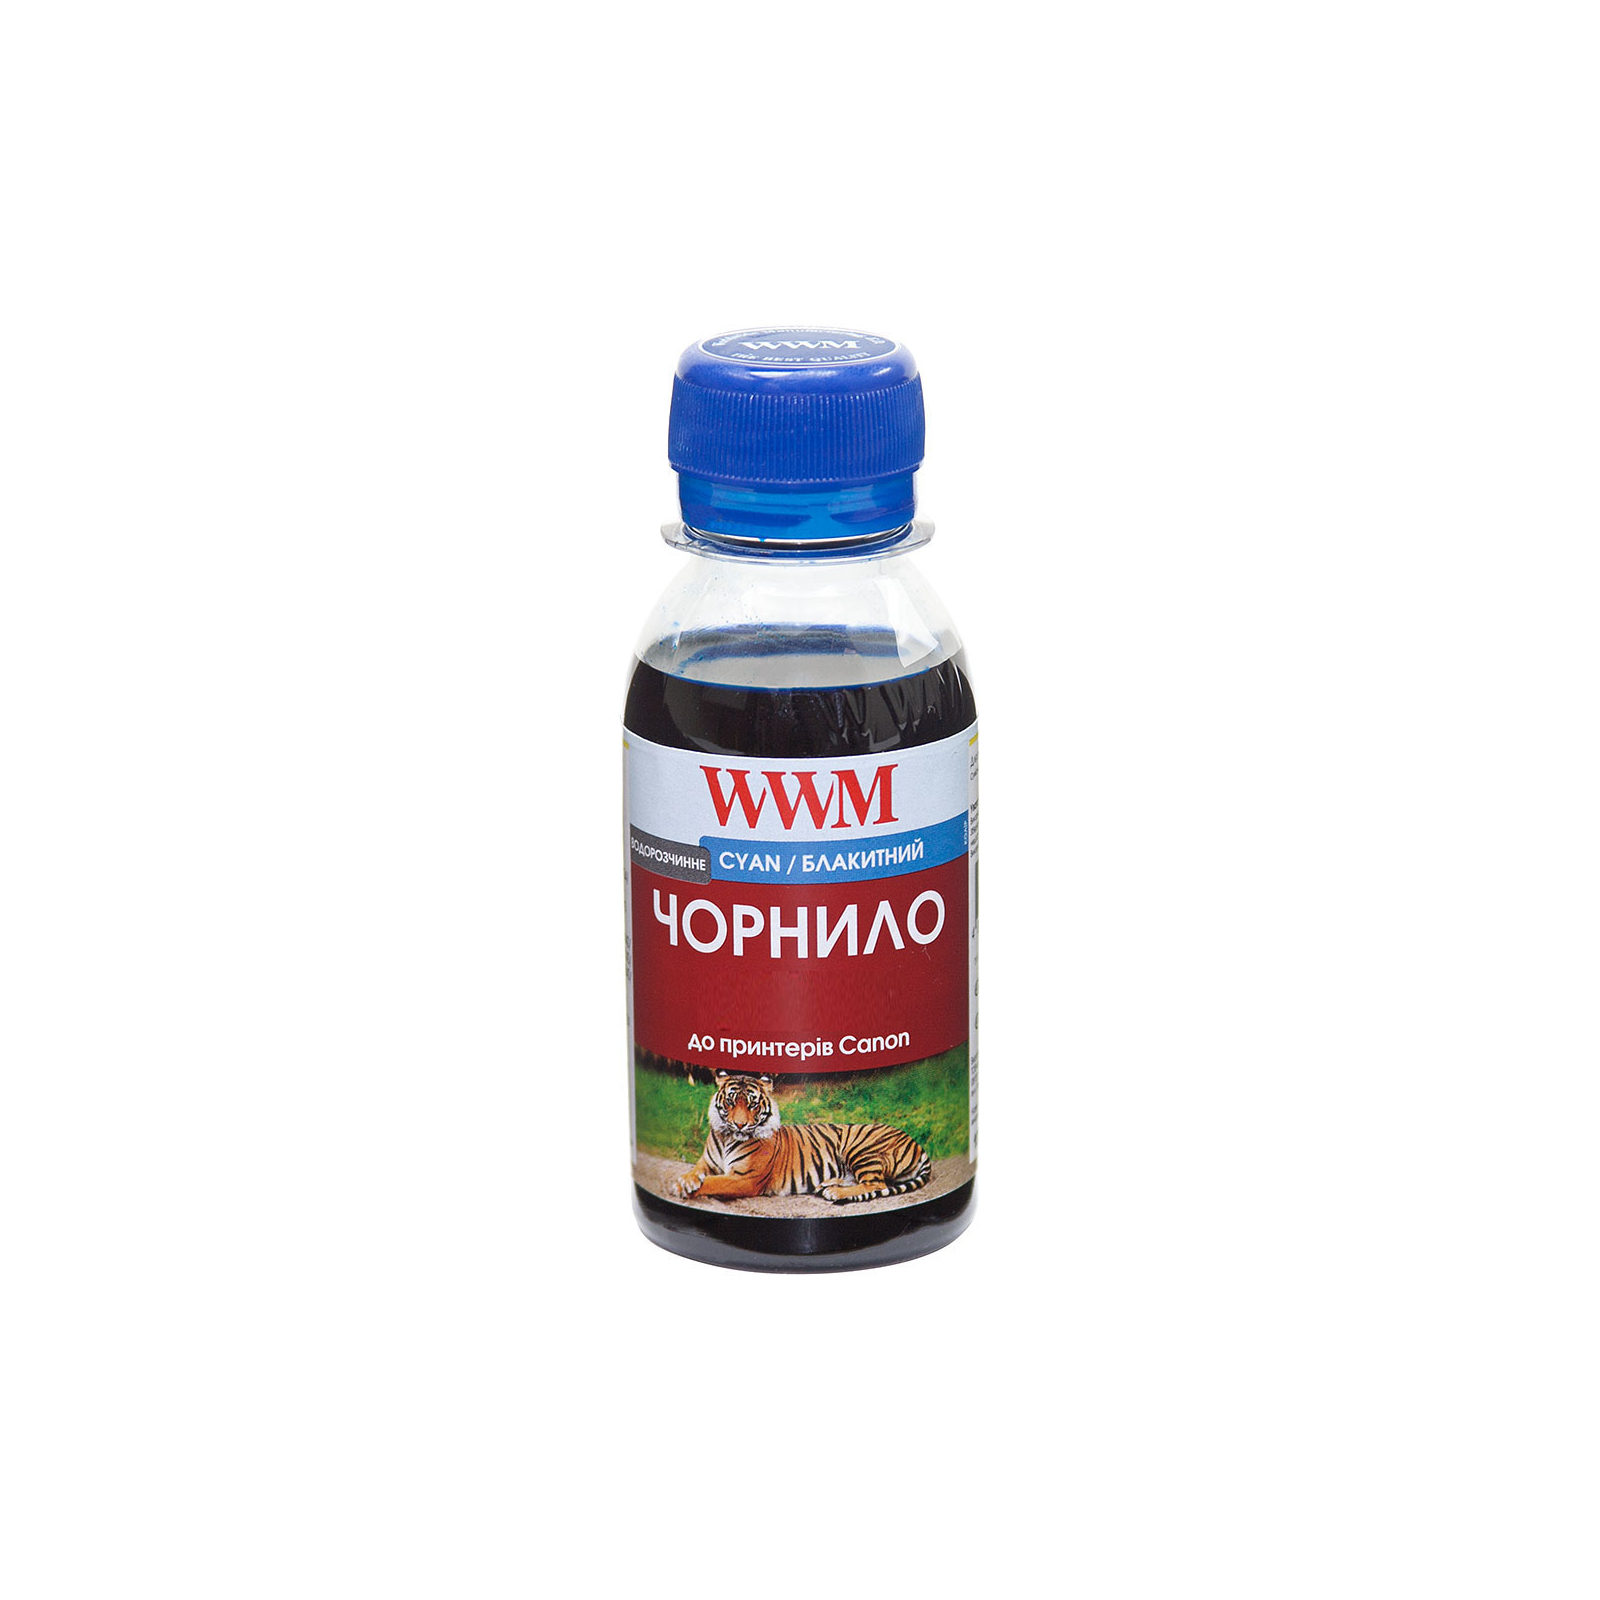 Чернила WWM Canon/HP/Lexmark 1000г Cyan Water-soluble (U06/C-4)